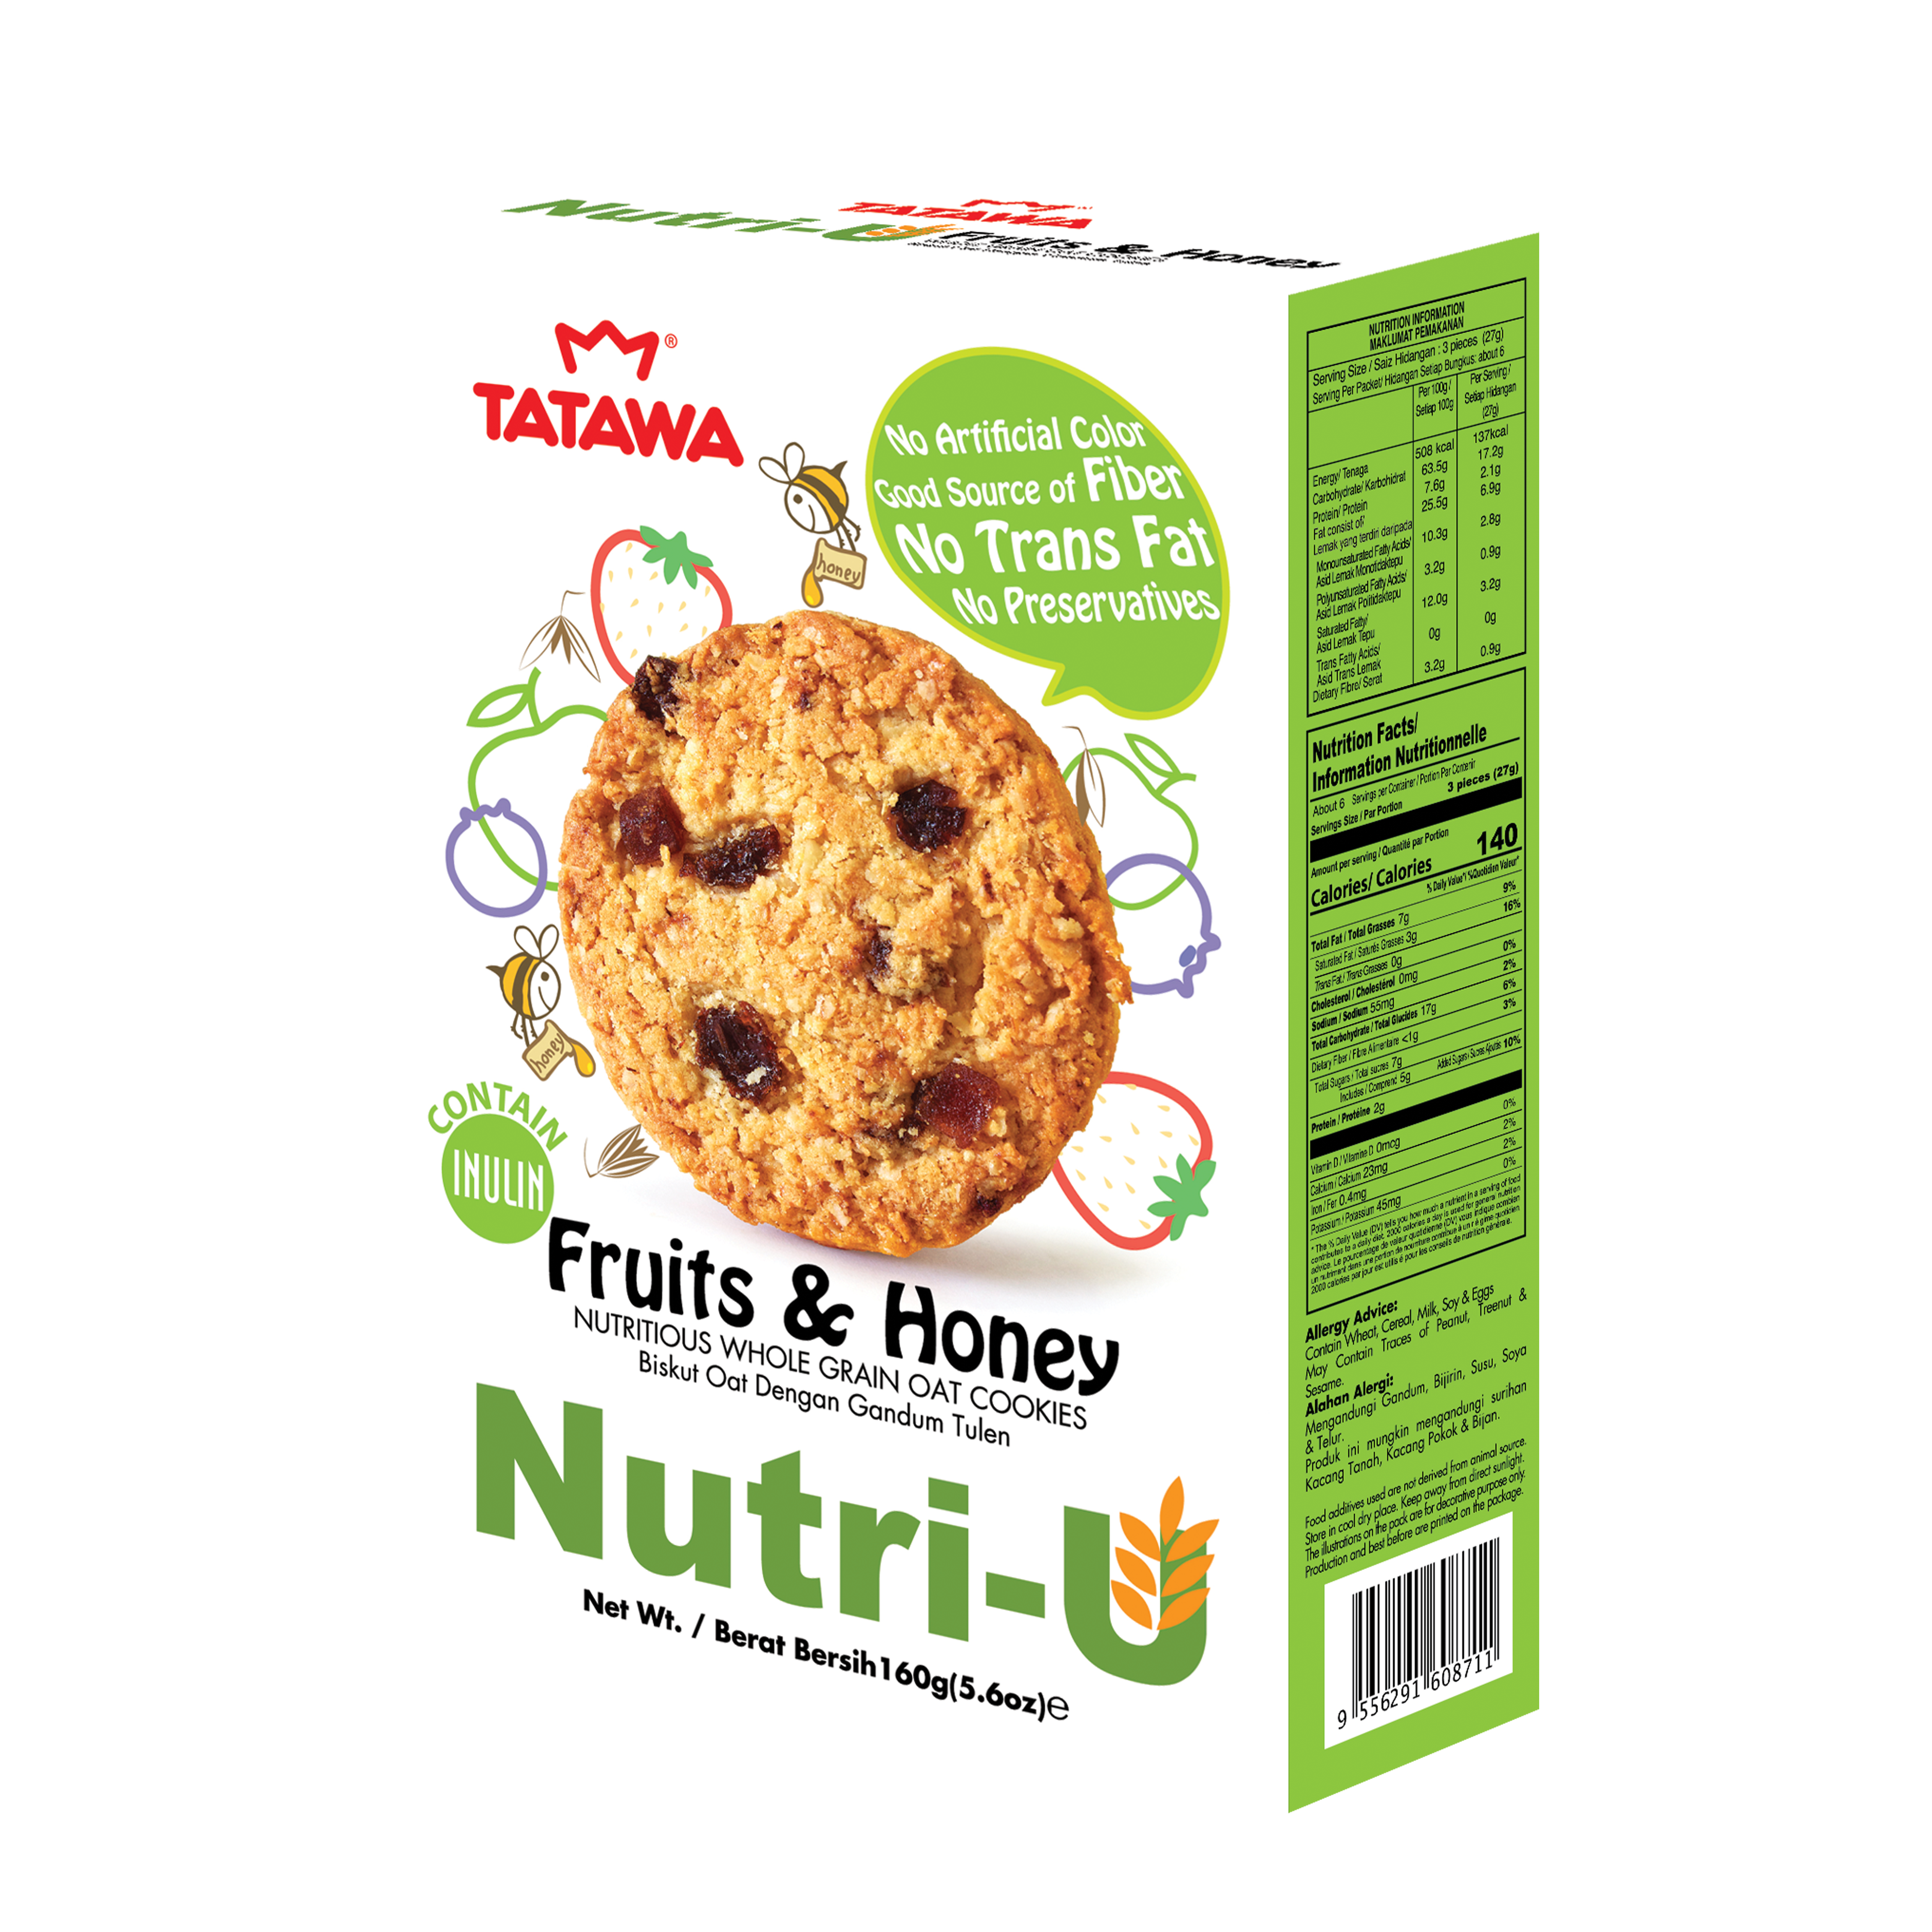 Nutri-U Fruits & Honey 160g Box